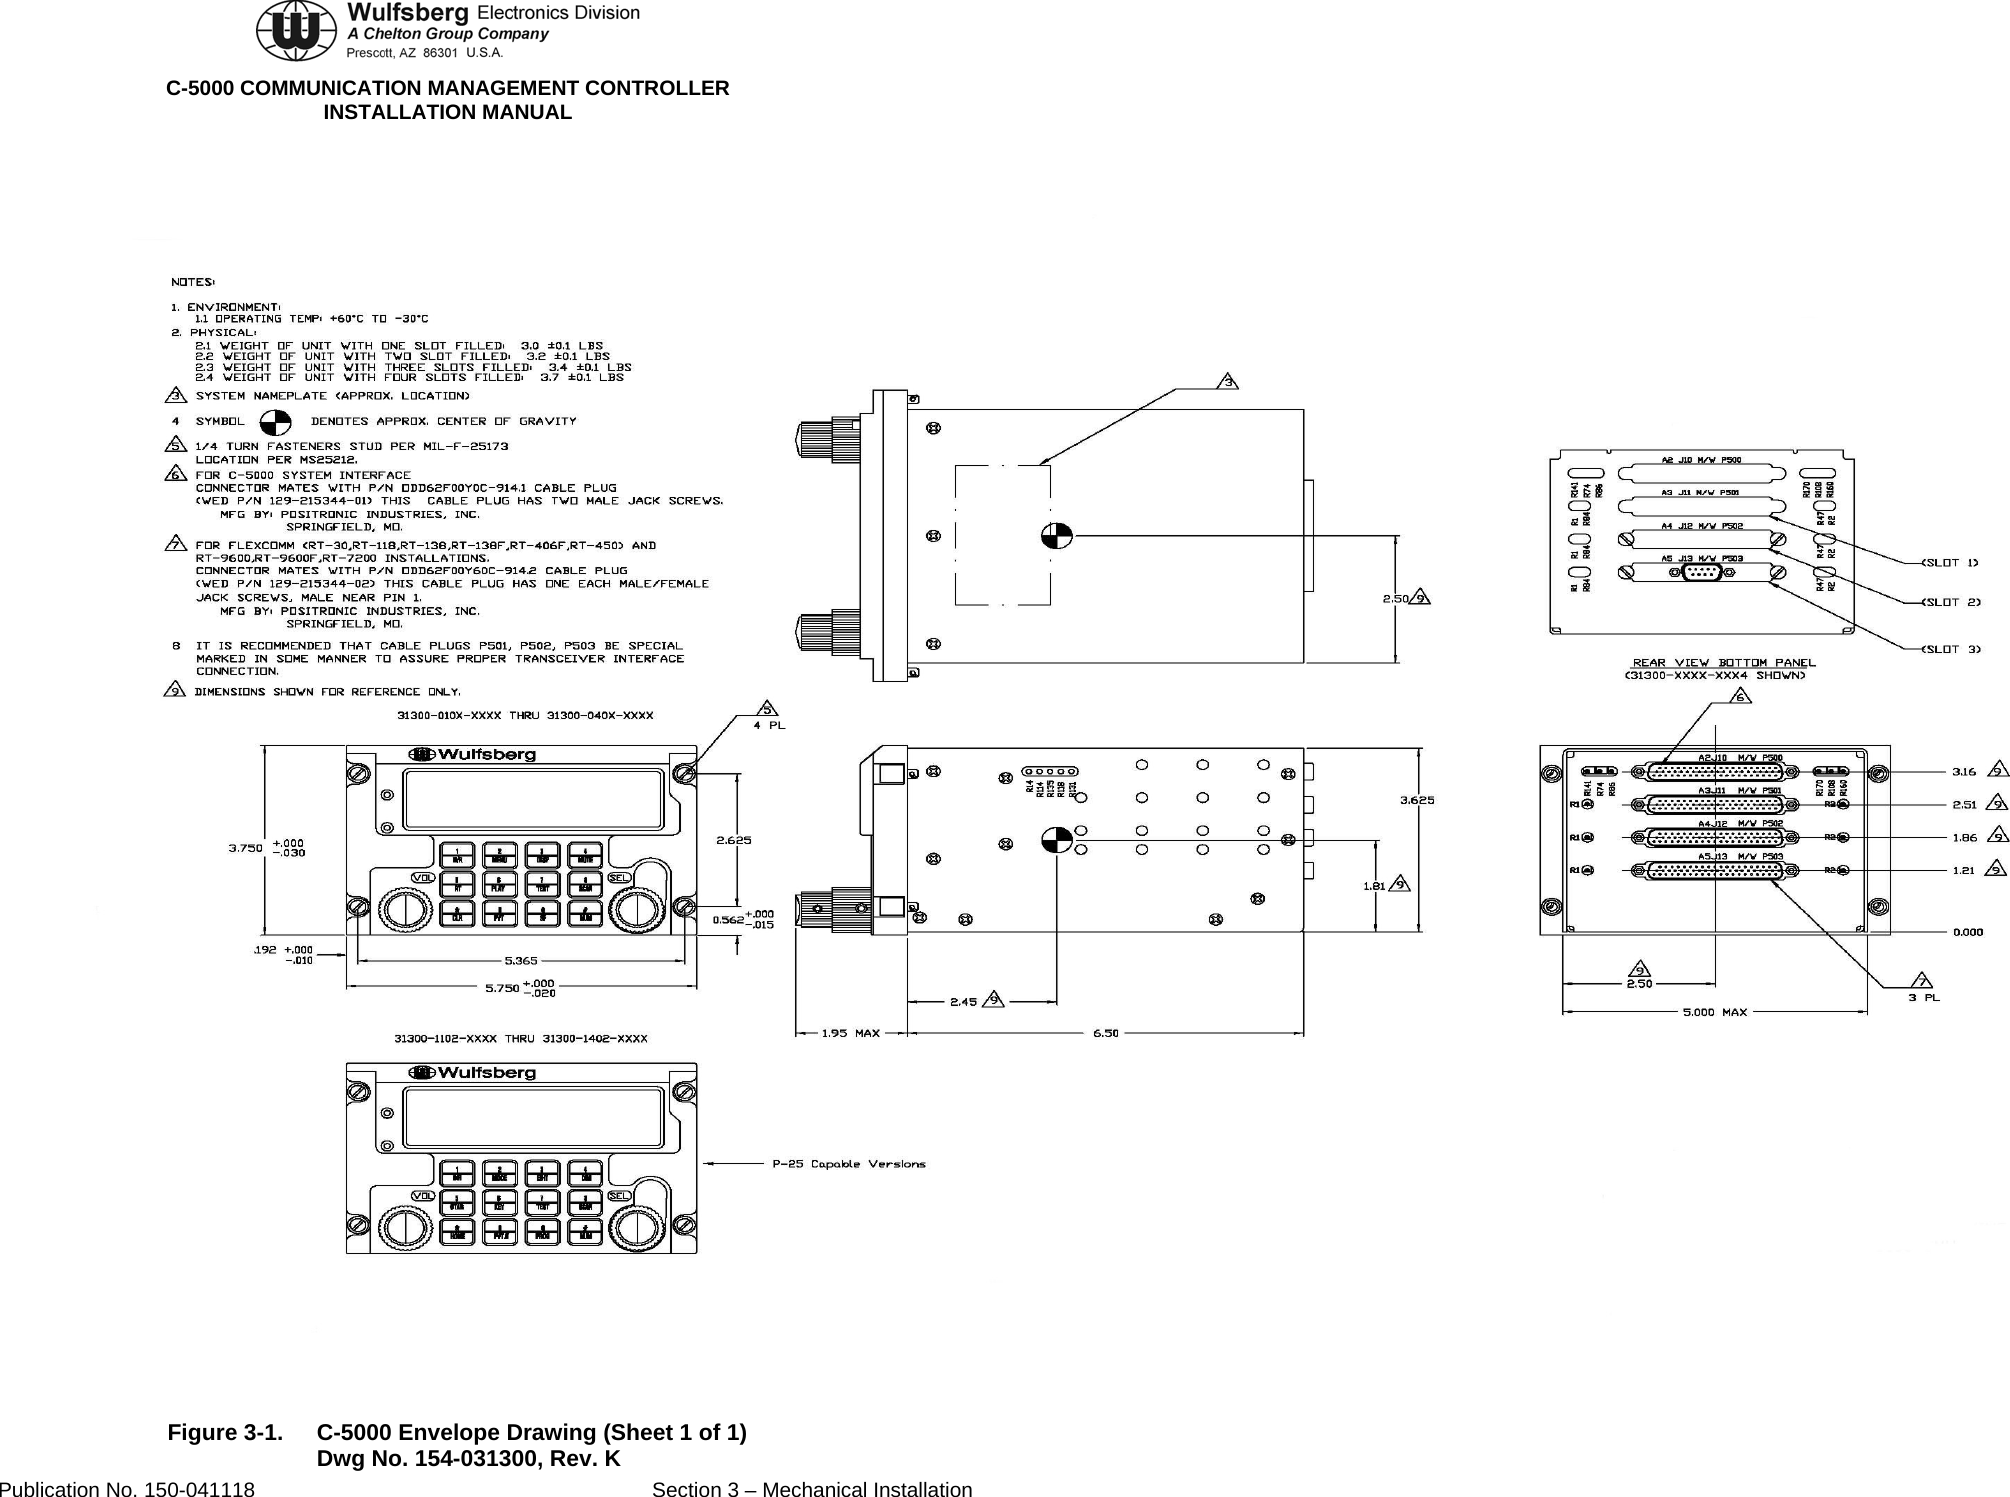  C-5000 COMMUNICATION MANAGEMENT CONTROLLER INSTALLATION MANUAL  Figure 3-1.  C-5000 Envelope Drawing (Sheet 1 of 1) Dwg No. 154-031300, Rev. K Publication No. 150-041118  Section 3 – Mechanical Installation 